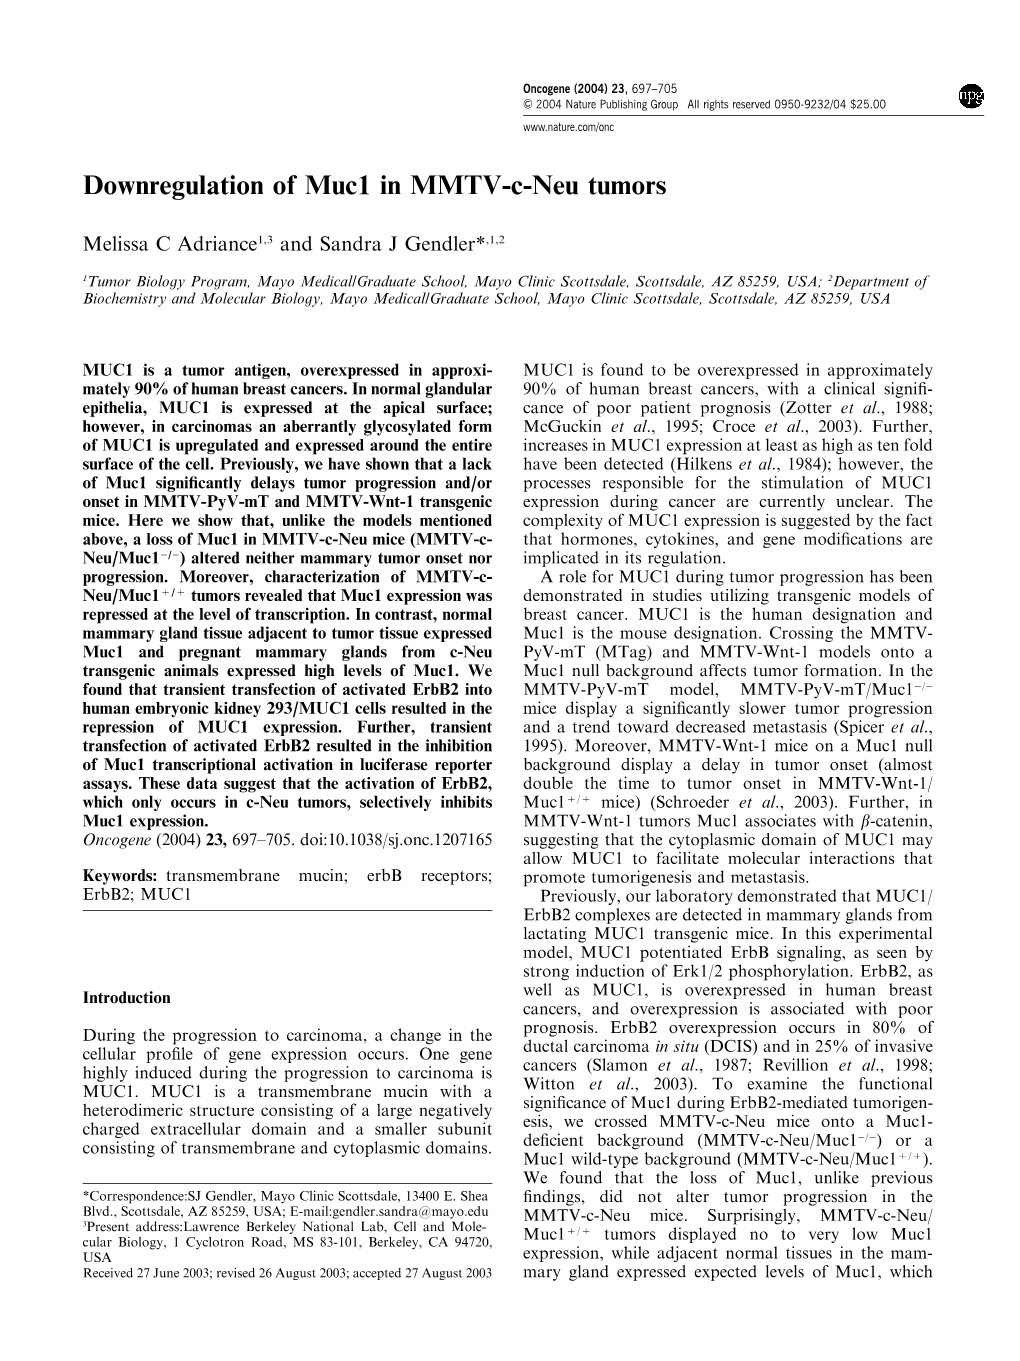 Downregulation of Muc1 in MMTV-C-Neu Tumors